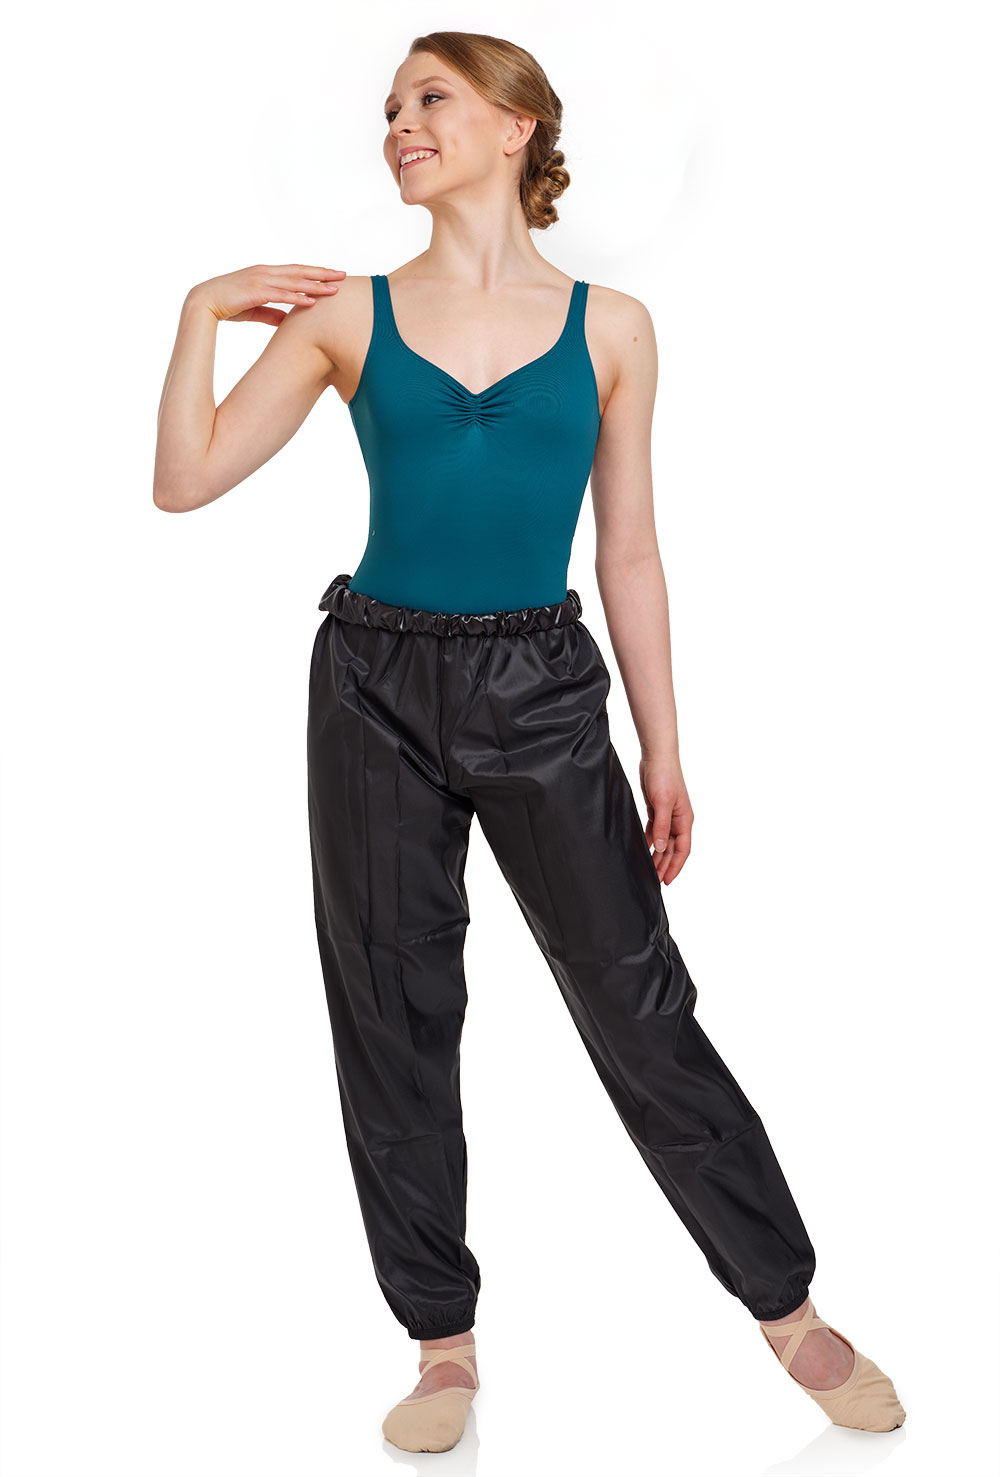 Adel - Retro 'Trash Bag' Warm-up Pants - Porselli Dancewear